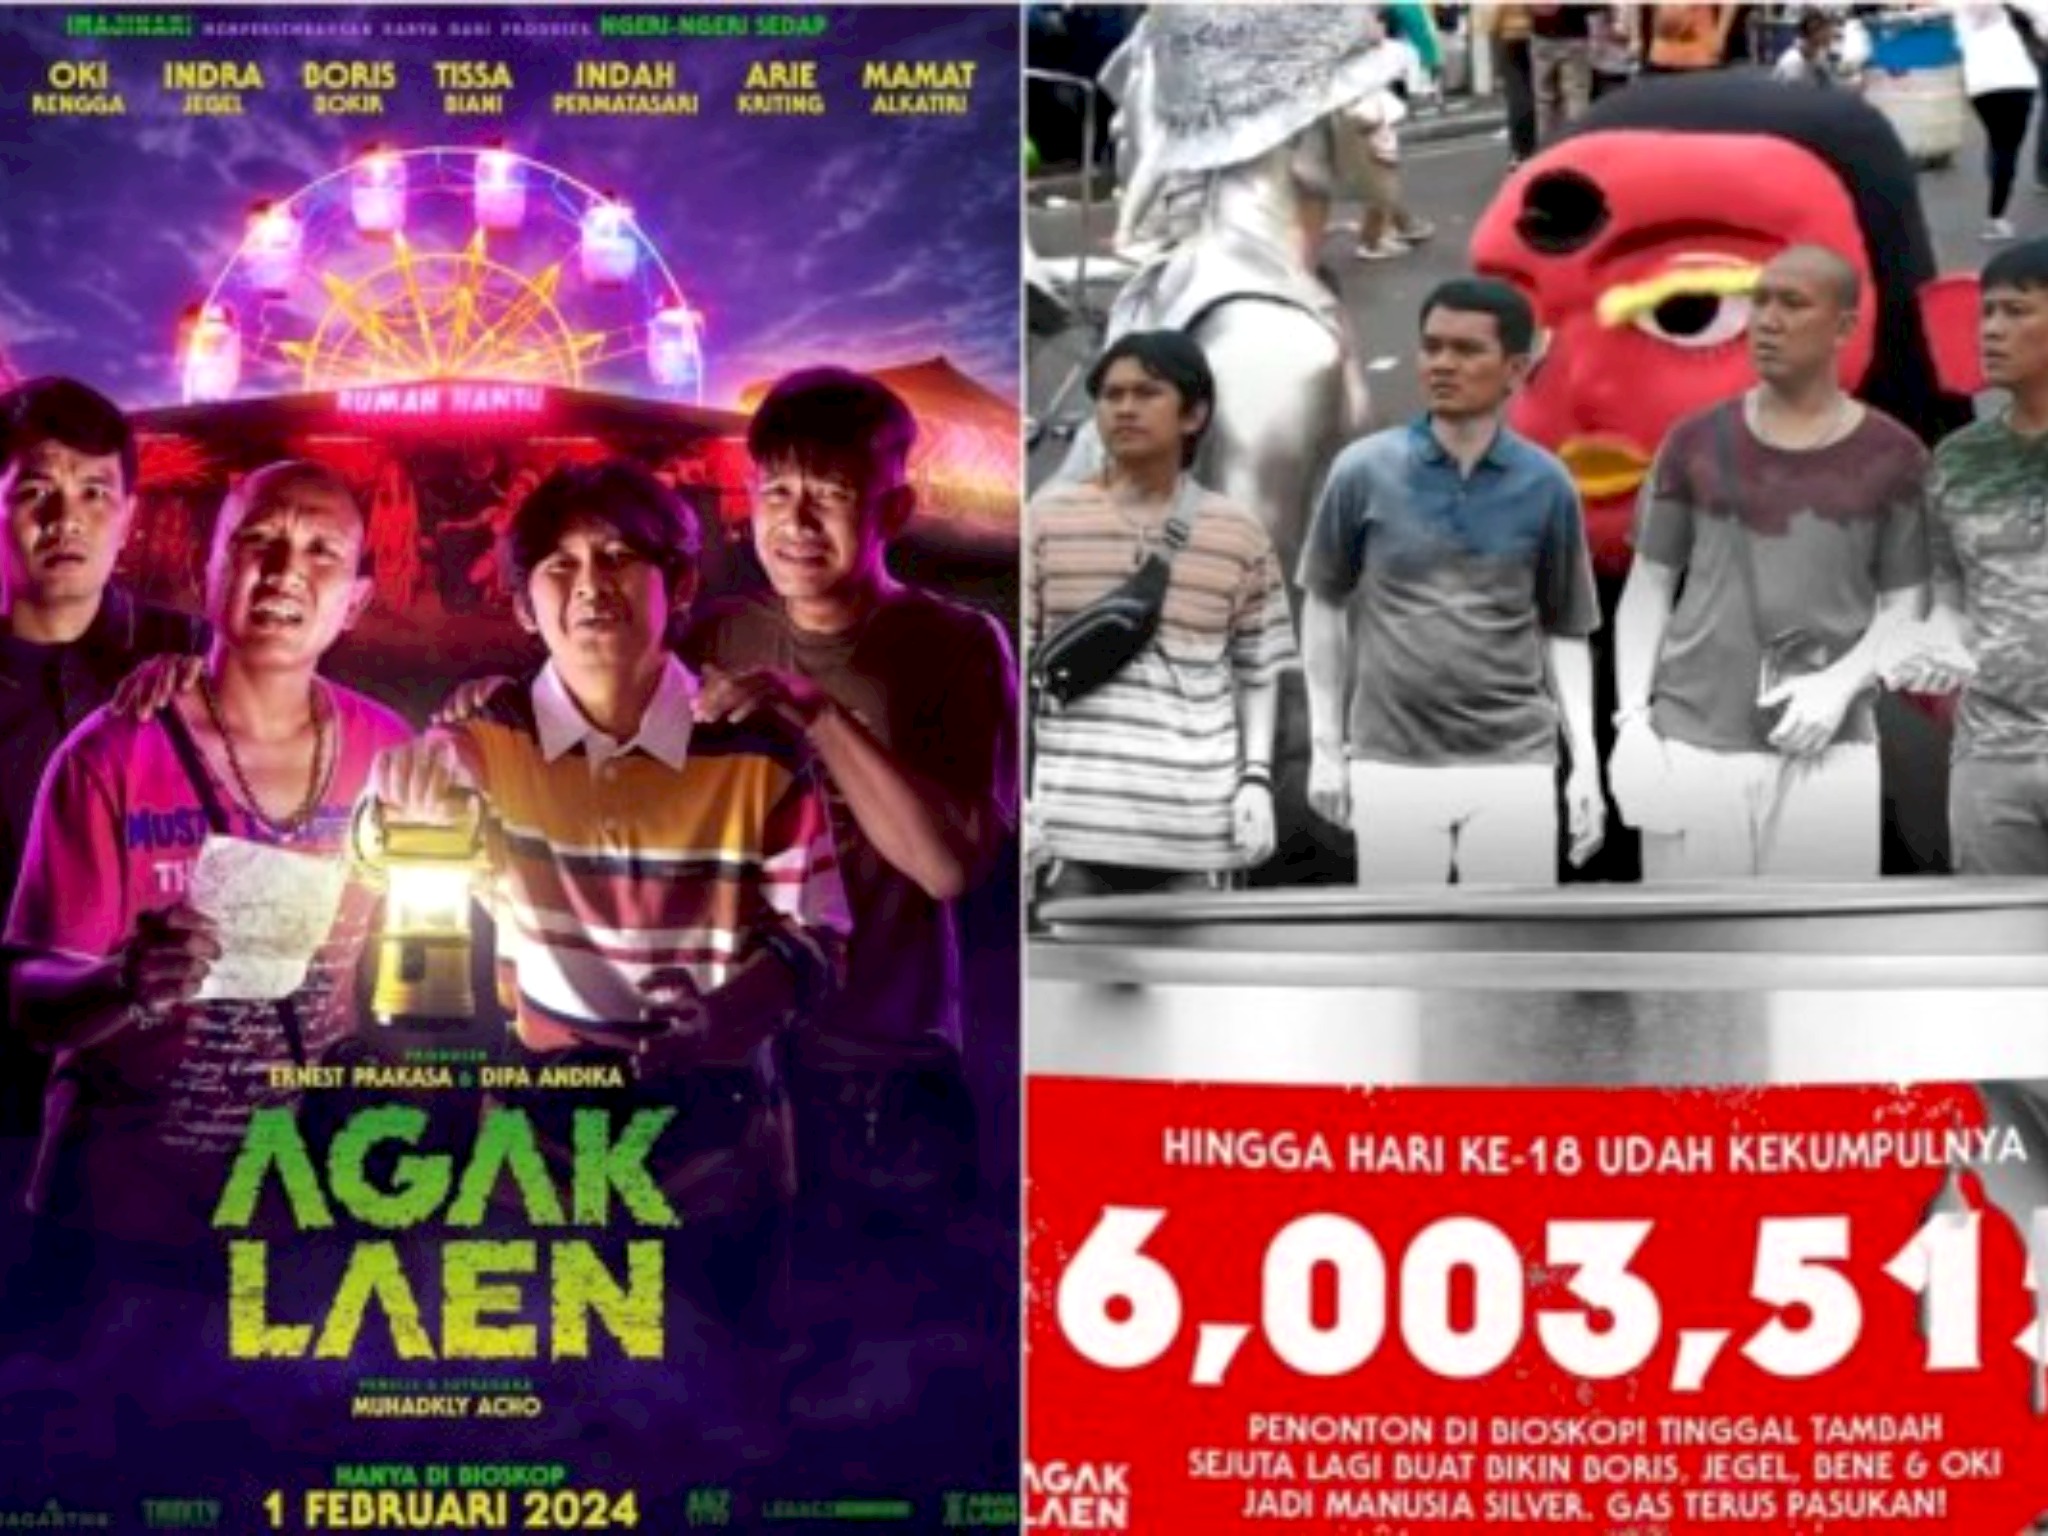 Film Agak Laen Capai 6 Juta Penonton, Cast Siap Jadi Manusia Silver